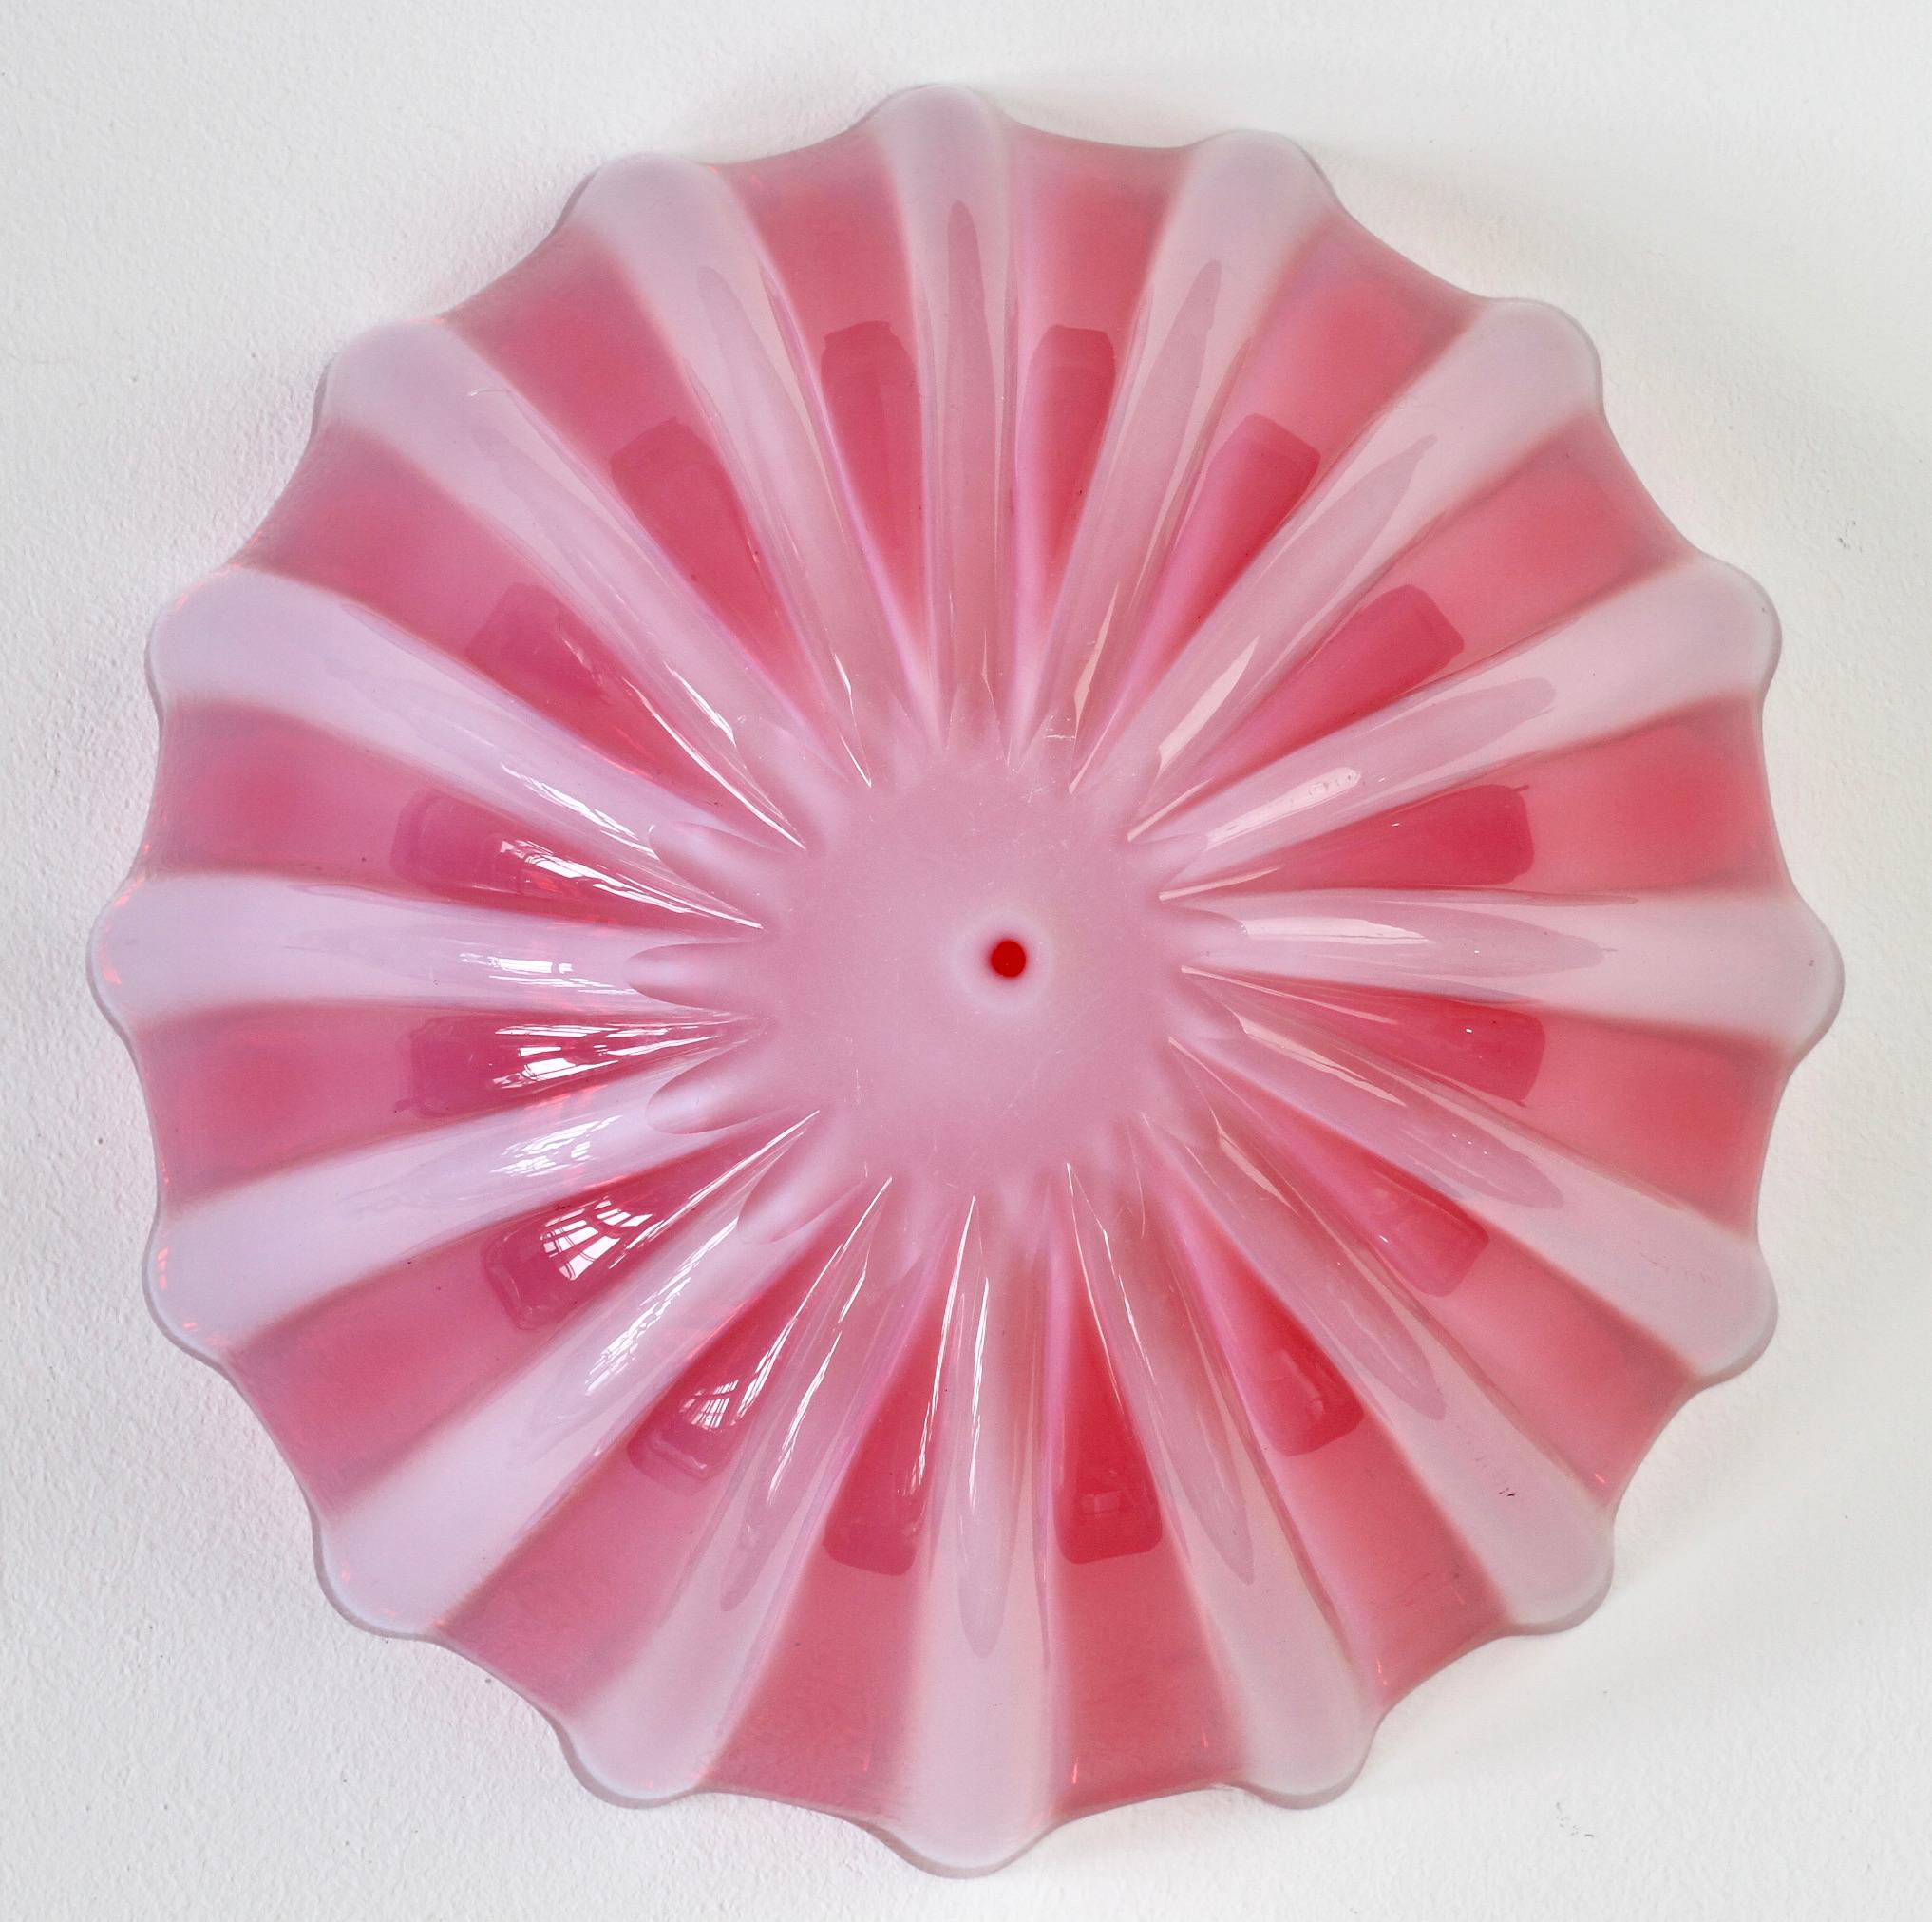 Seguso Vetri d'Arte Large Red, Pink Opaline Murano Glass Fruit Bowl circa 1980s For Sale 3